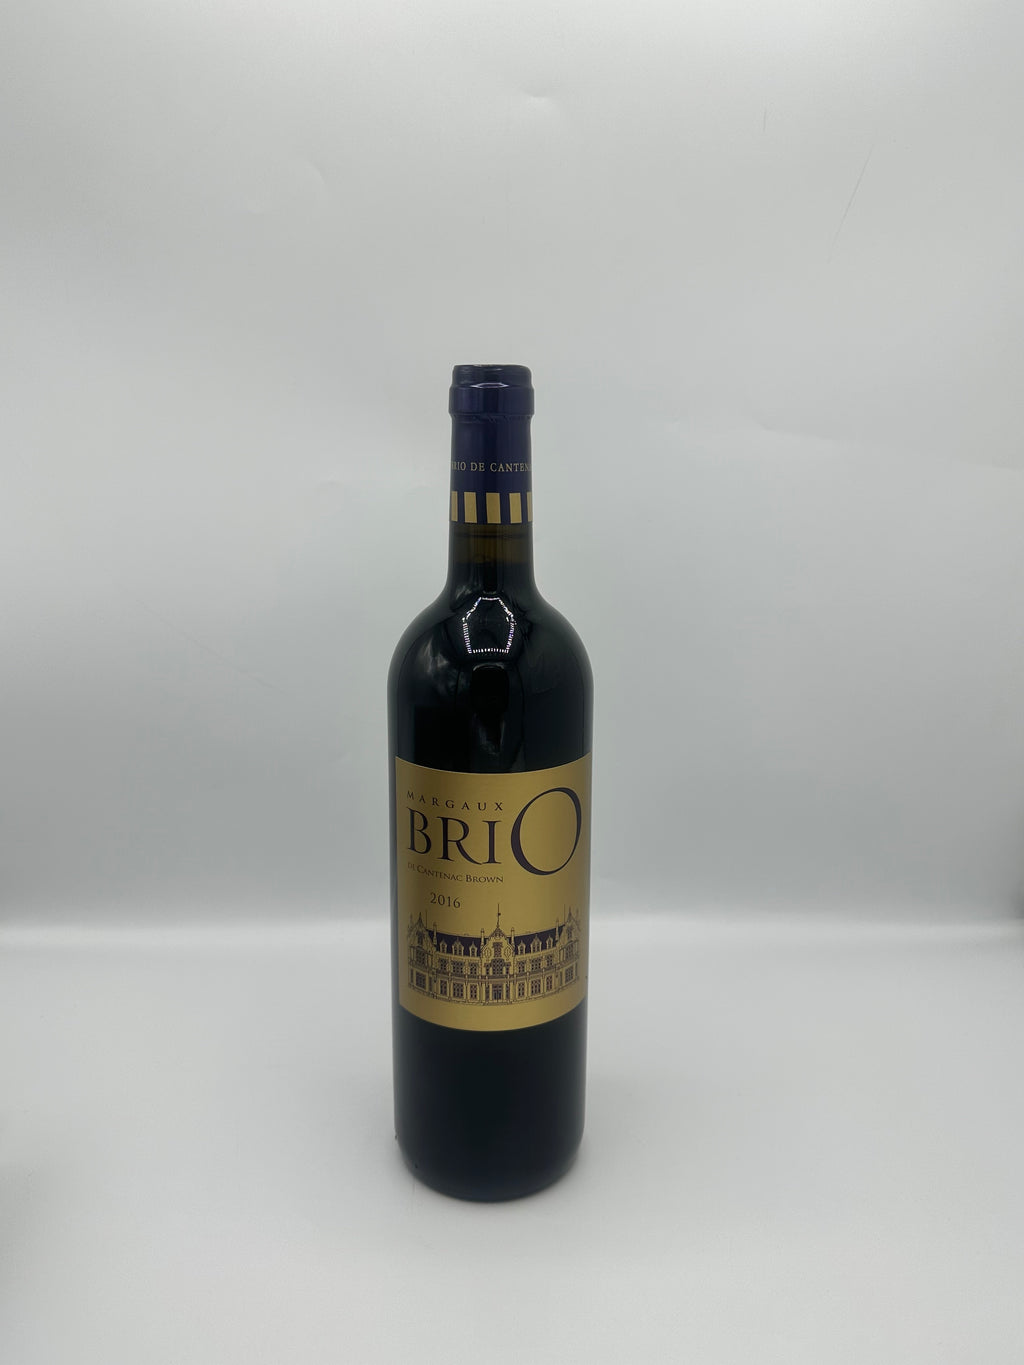 Margaux "BriO" 2016 Rouge - Château Cantenac Brown